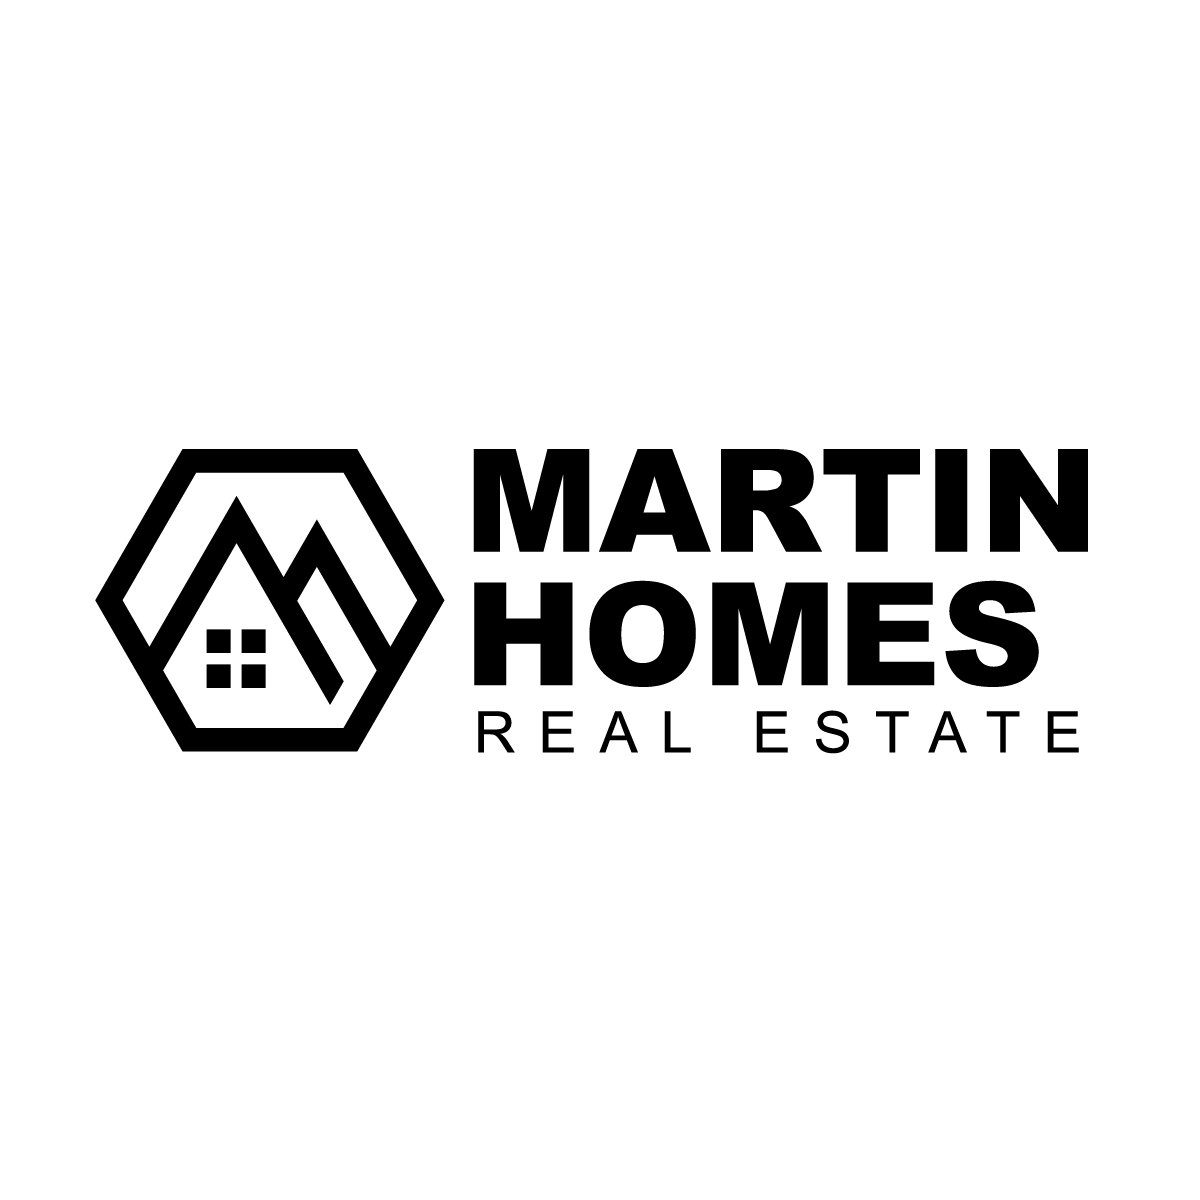 Jimmy Martin, REALTOR - Martin Homes Real Estate